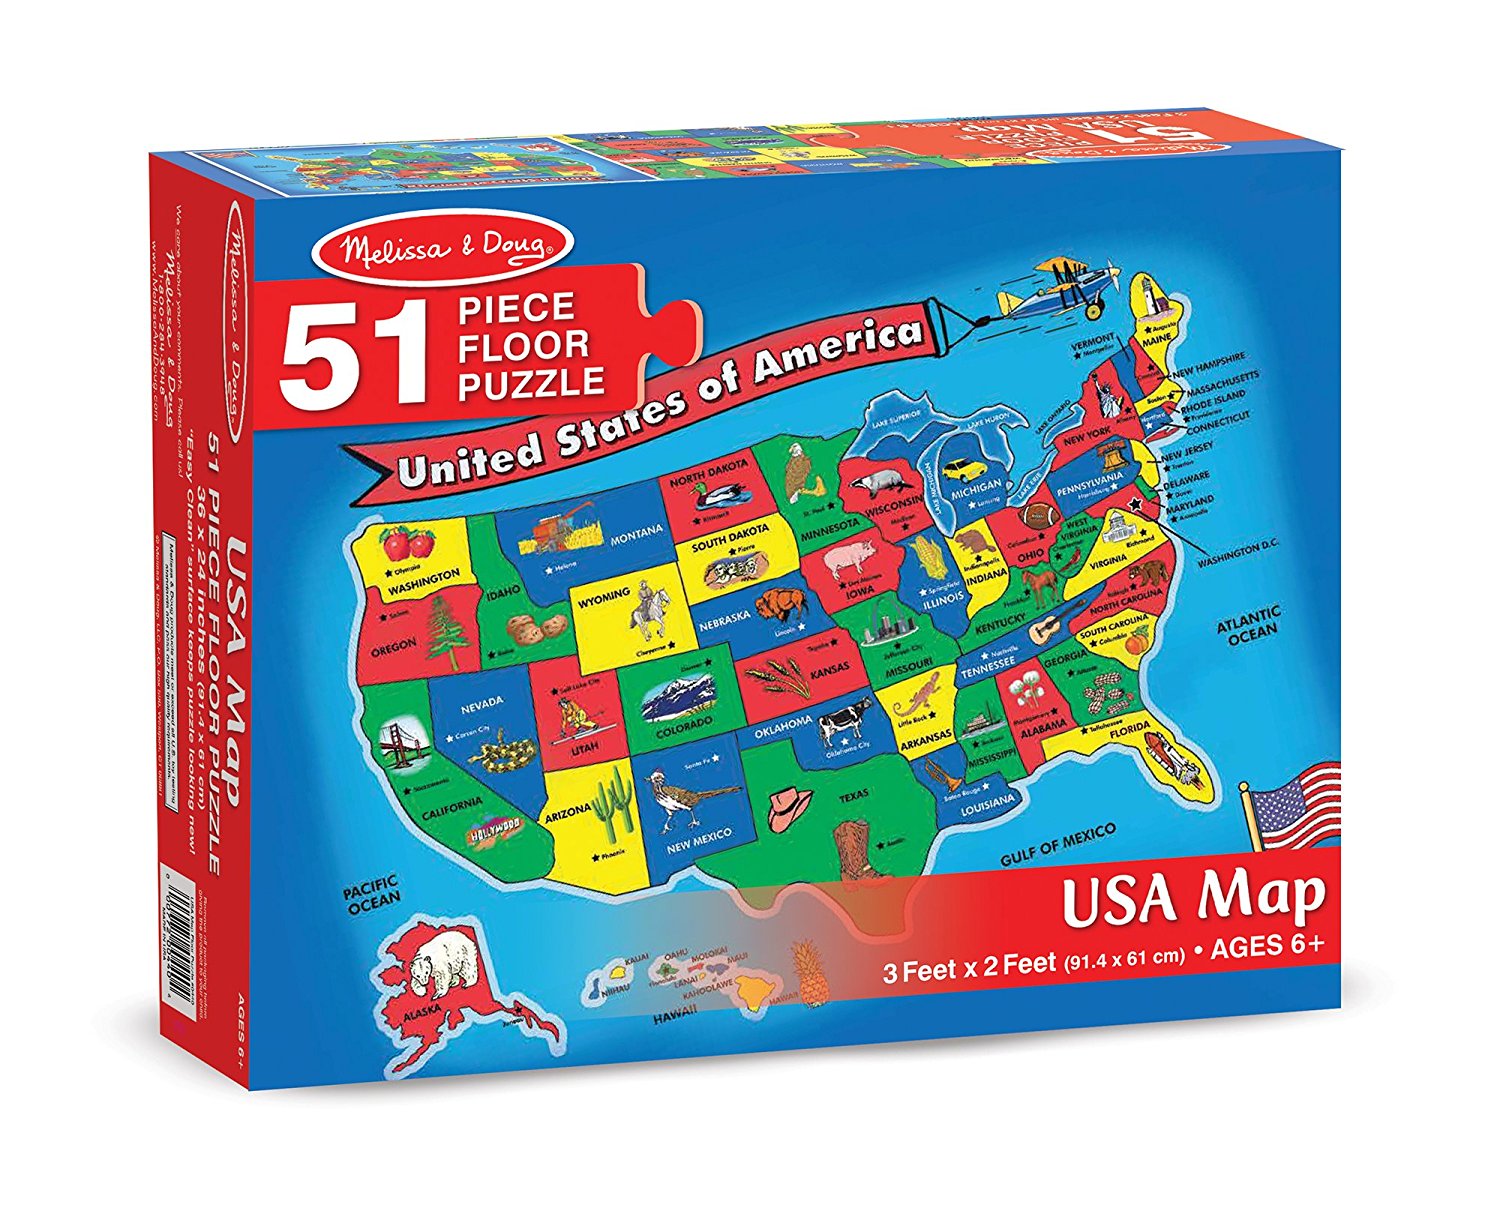 Melissa & Doug USA Map Extra Large Floor Puzzle (51 pcs, 2 x 3 feet) [Home Decor]- Olde Church Emporium